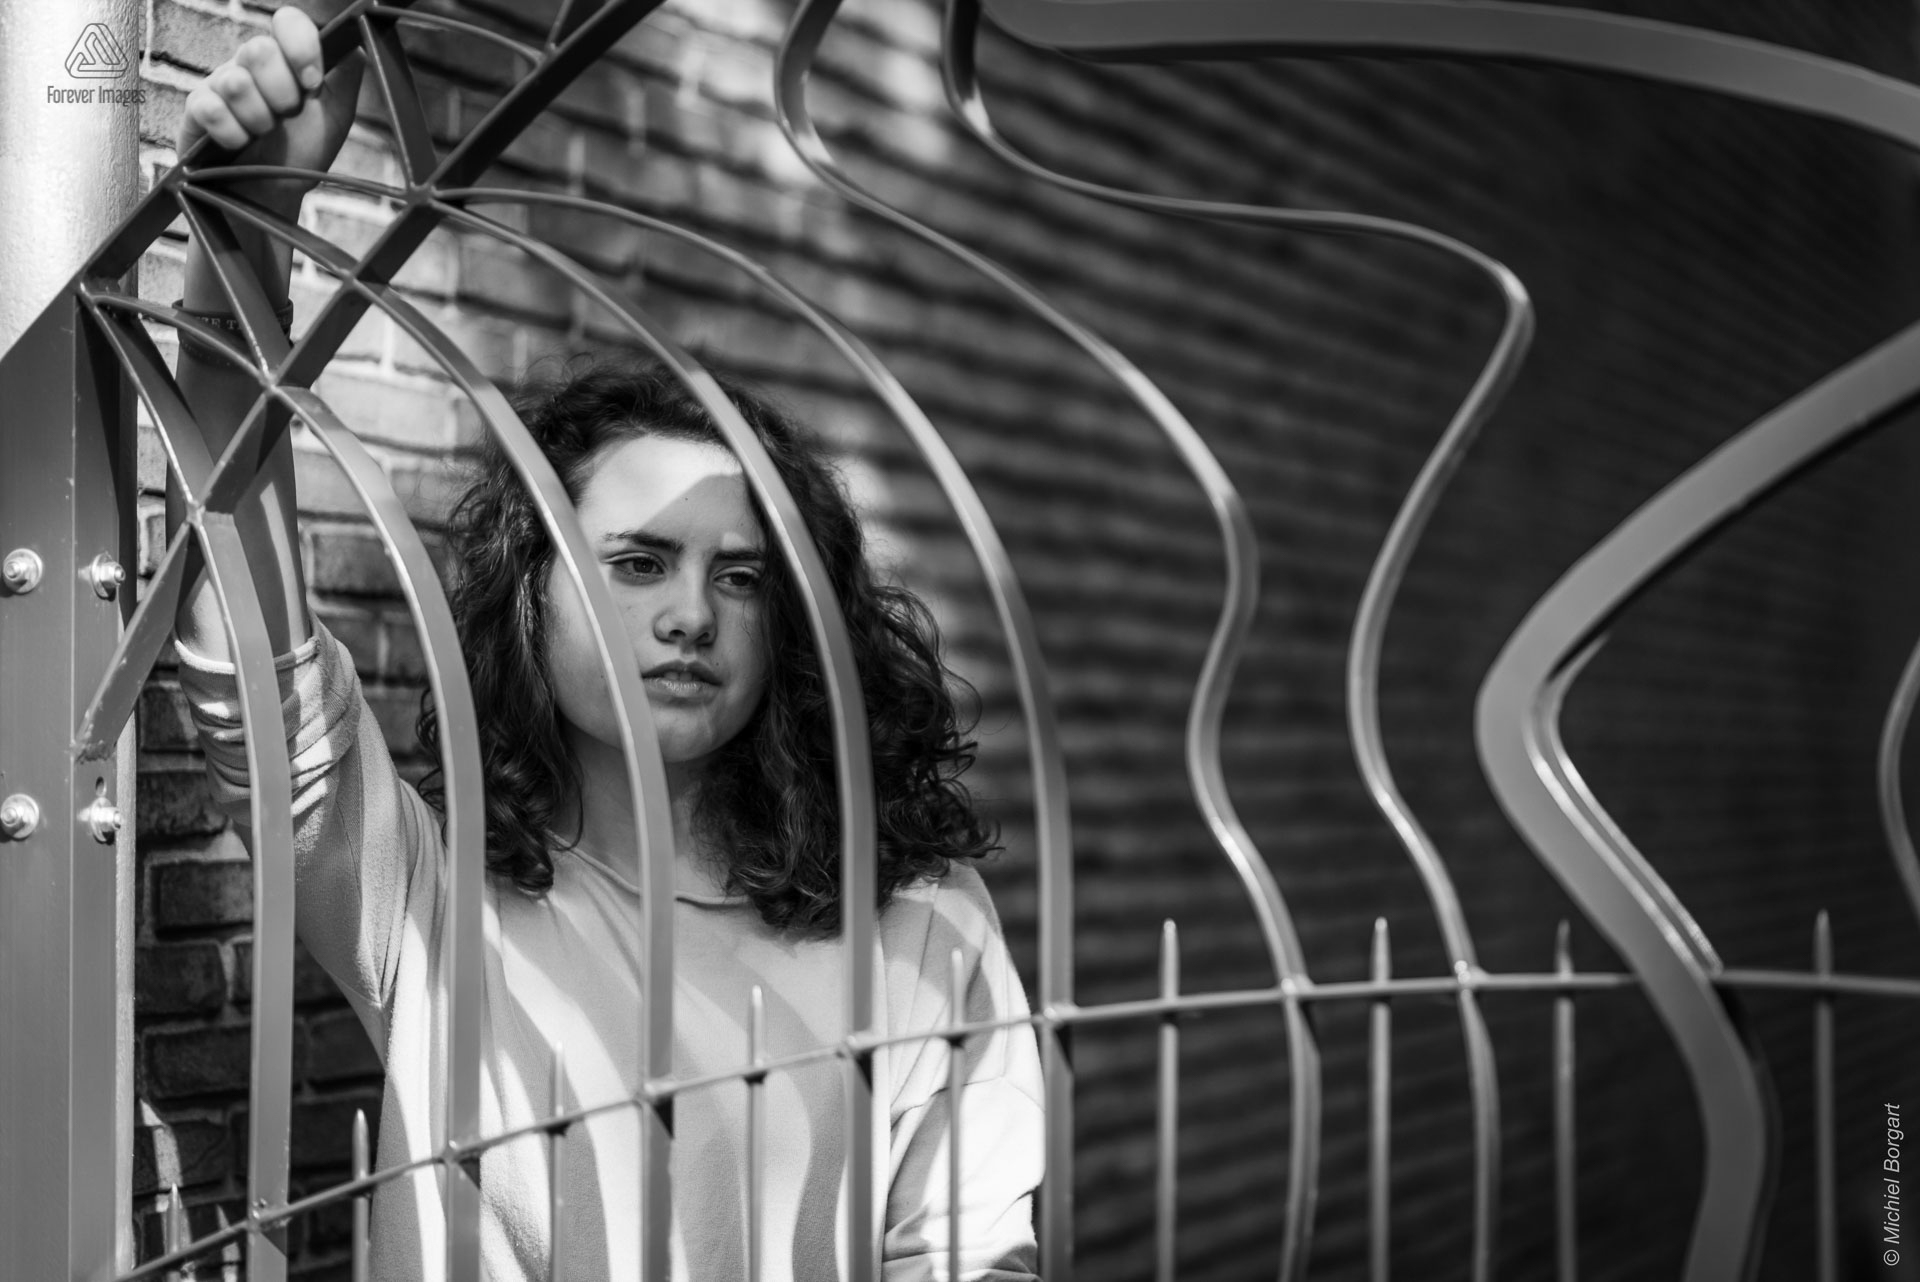 Portretfoto zwart-wit jonge dame houd hek vast en kijkt opzij | Tessa Holscher | Portretfotograaf Michiel Borgart - Forever Images.